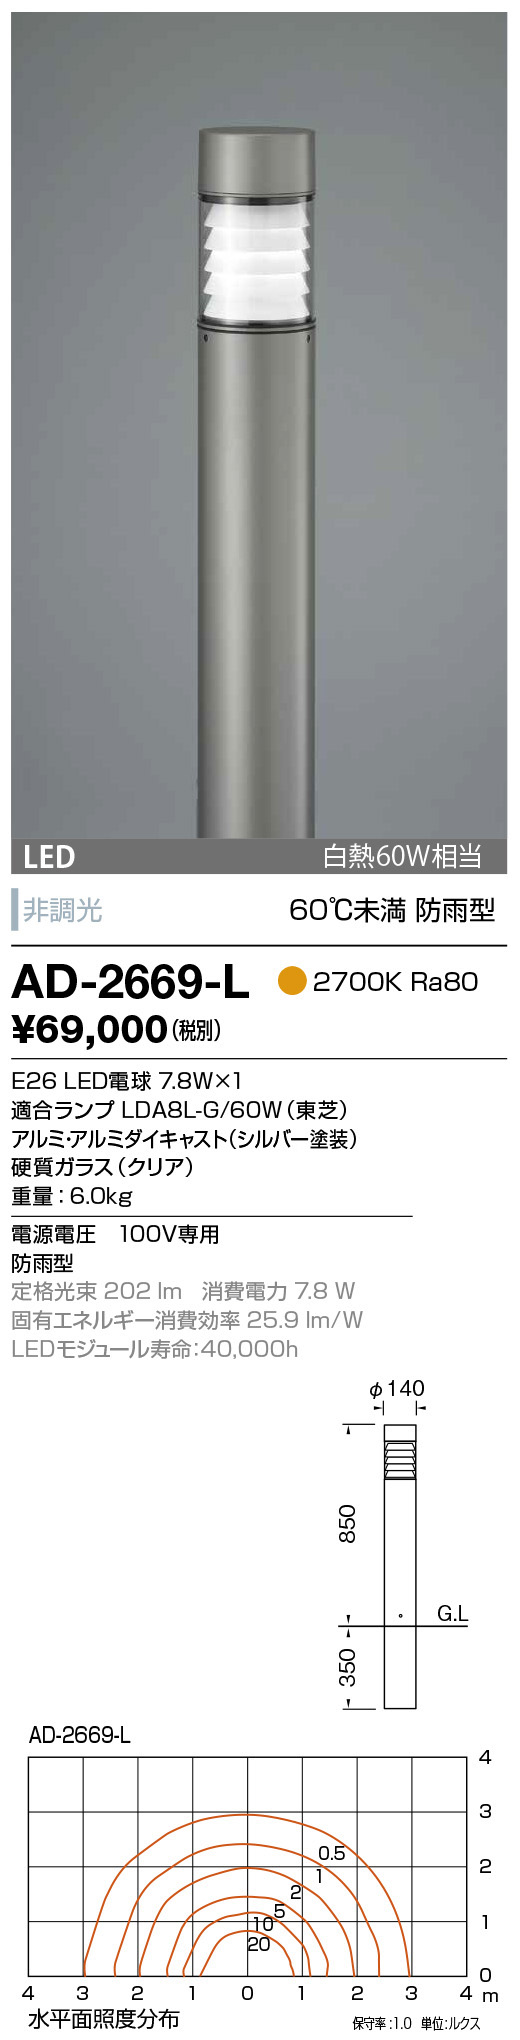 AD-2669-L(山田照明) 商品詳細 ～ 照明器具・換気扇他、電設資材販売のブライト